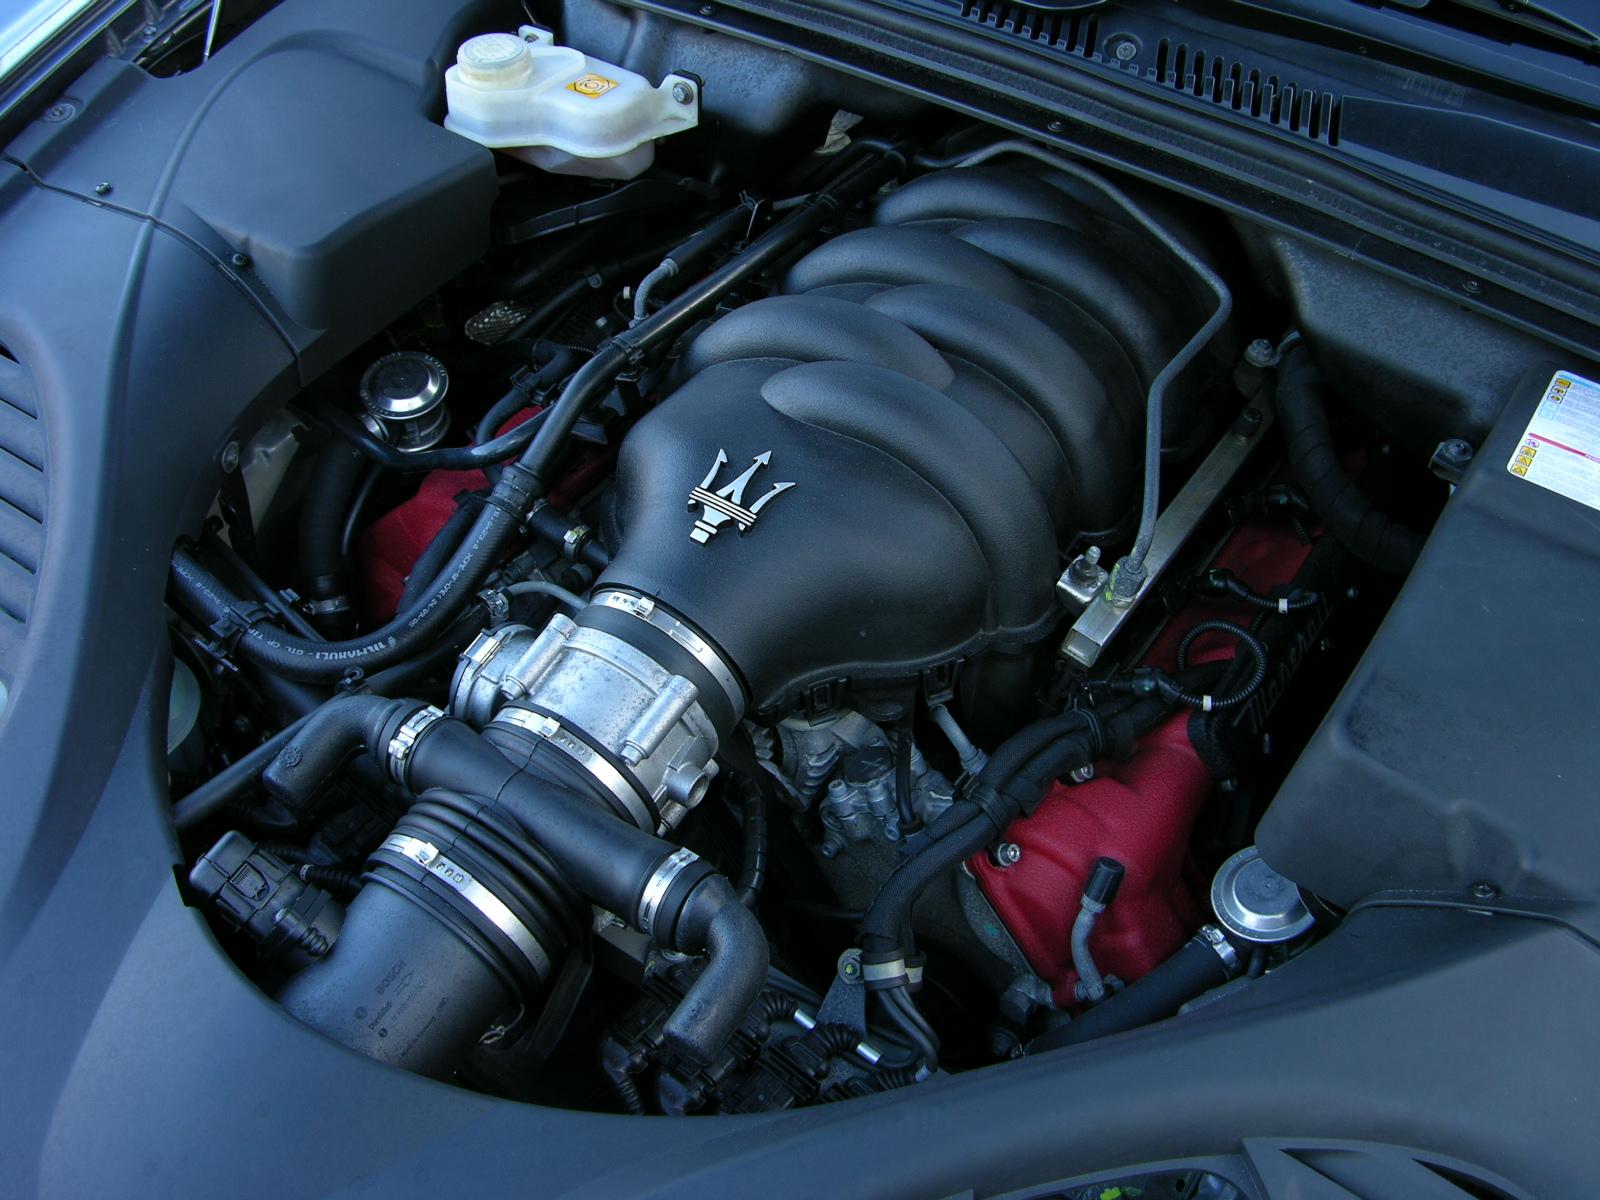 Двигатель мазерати. Мотор Мазерати Кватропорте. Мотор Мазерати 4.2. Двигатель Мазерати Кватропорте 4.2. Maserati Quattroporte двигатель.